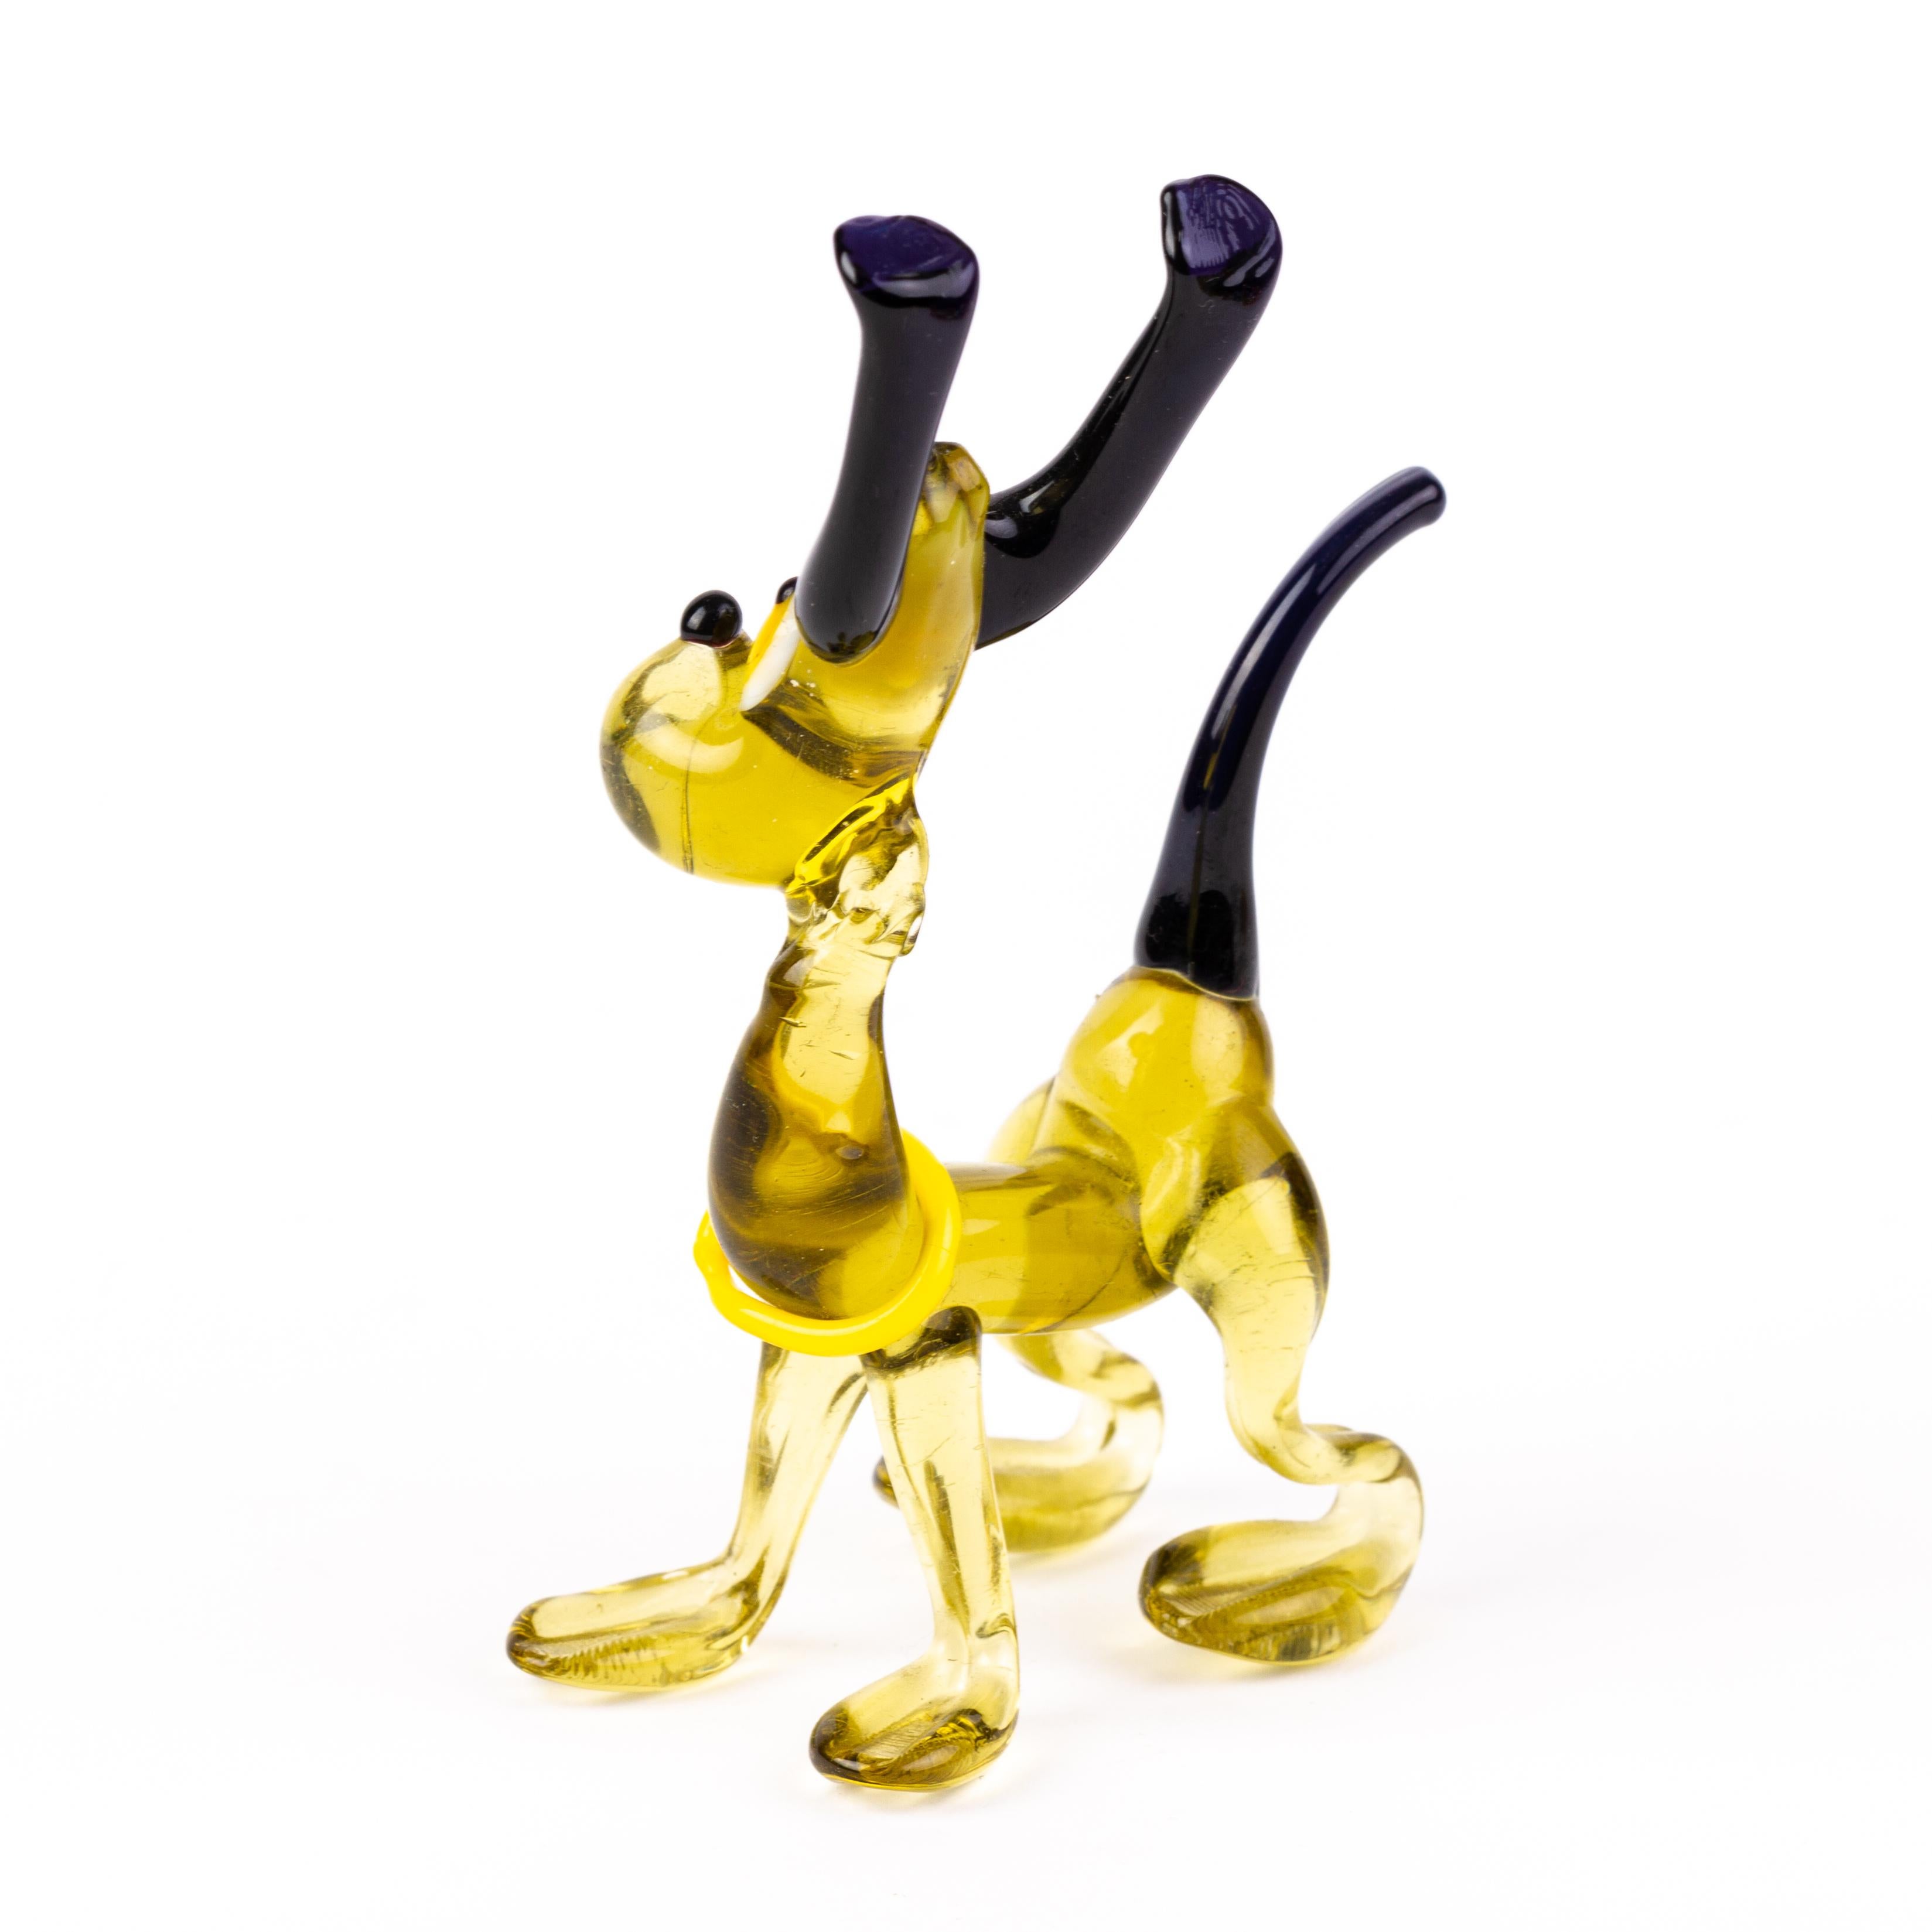 Murano Venetian Glass Designer Sculpture Dog
Good condition
Free international shipping.